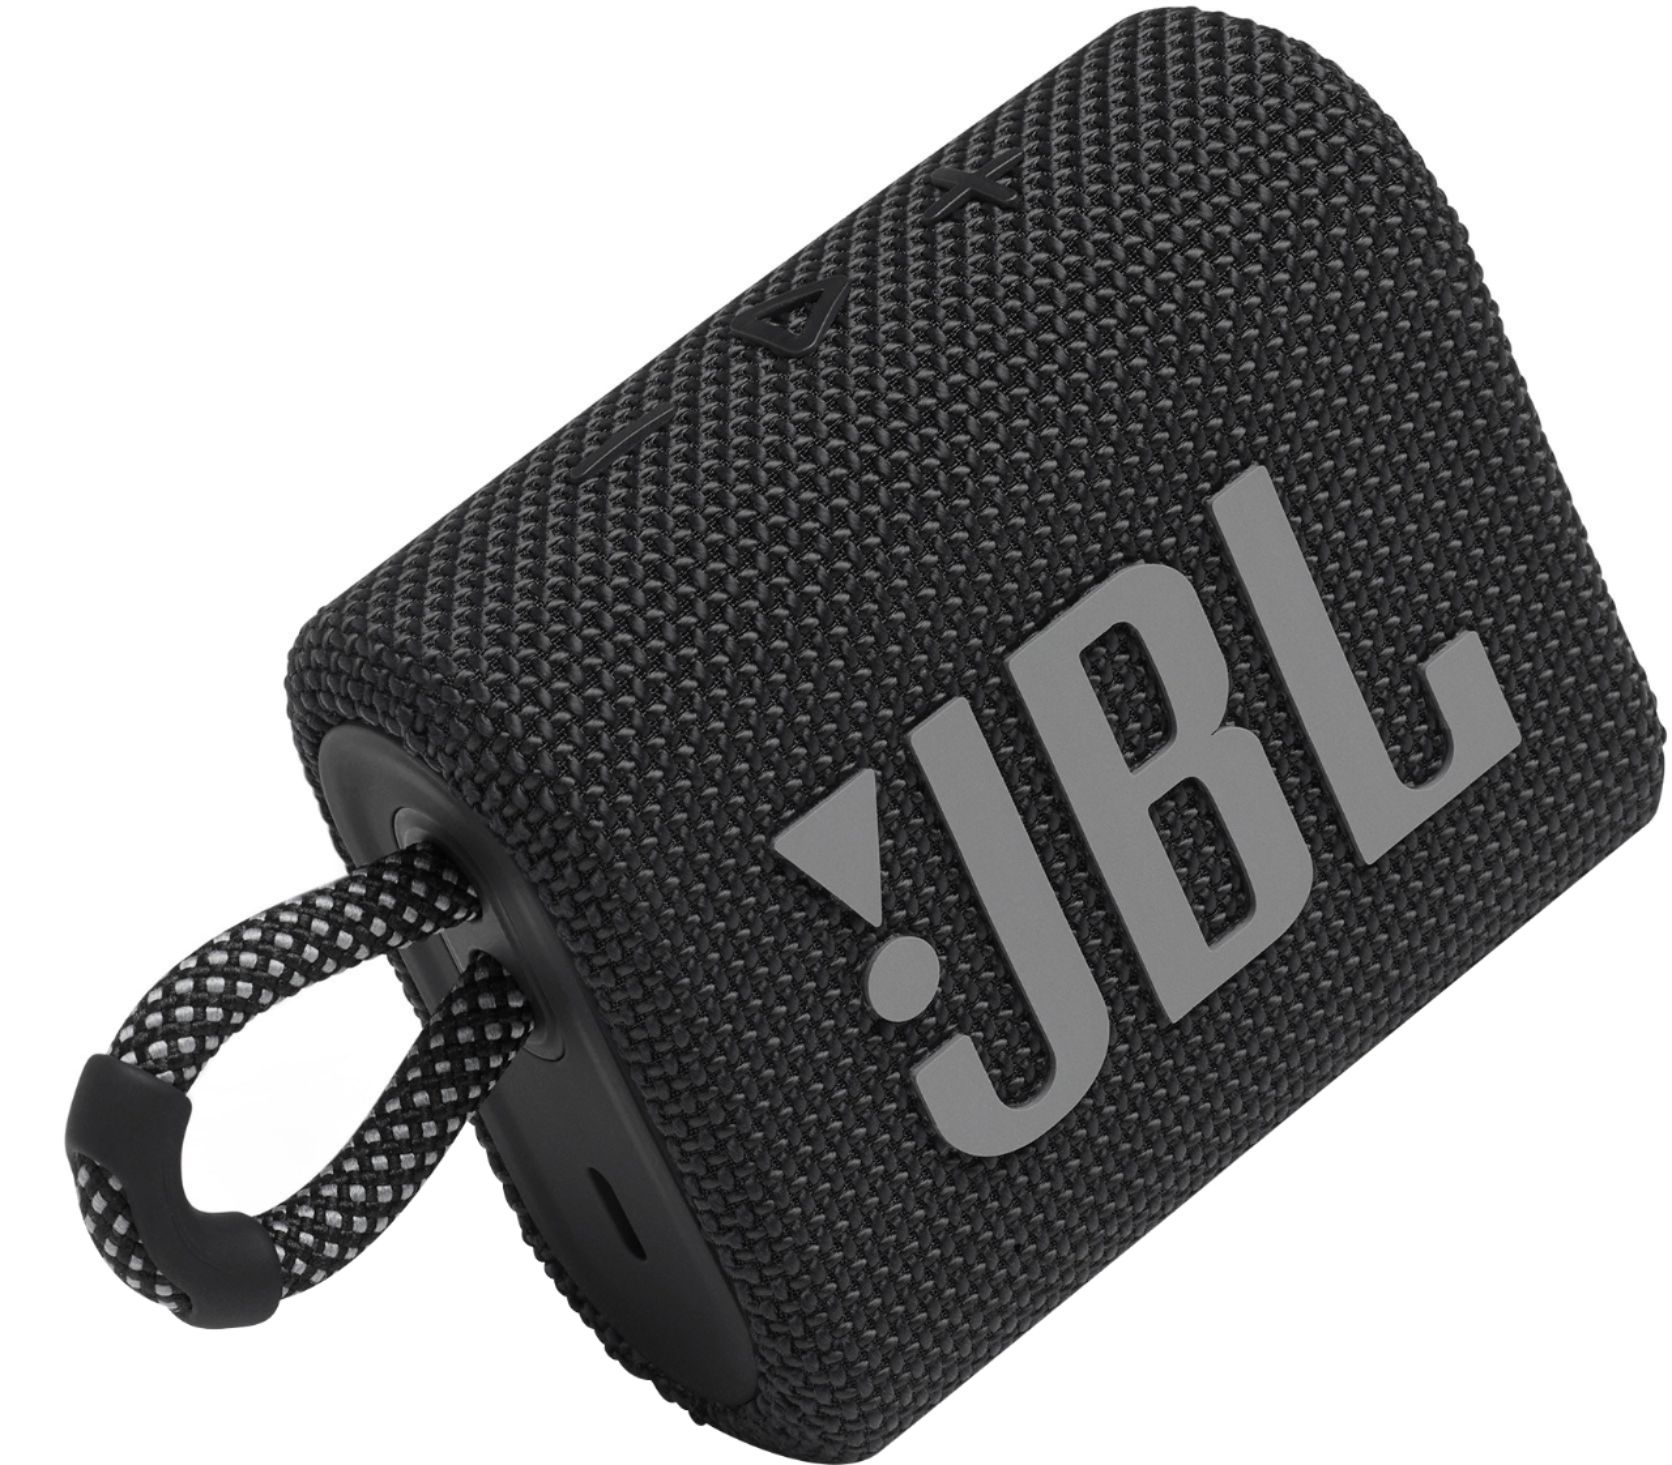 JBL Go 3 - Speaker - for portable use - wireless - Bluetooth - 4.2 Watt -  red 